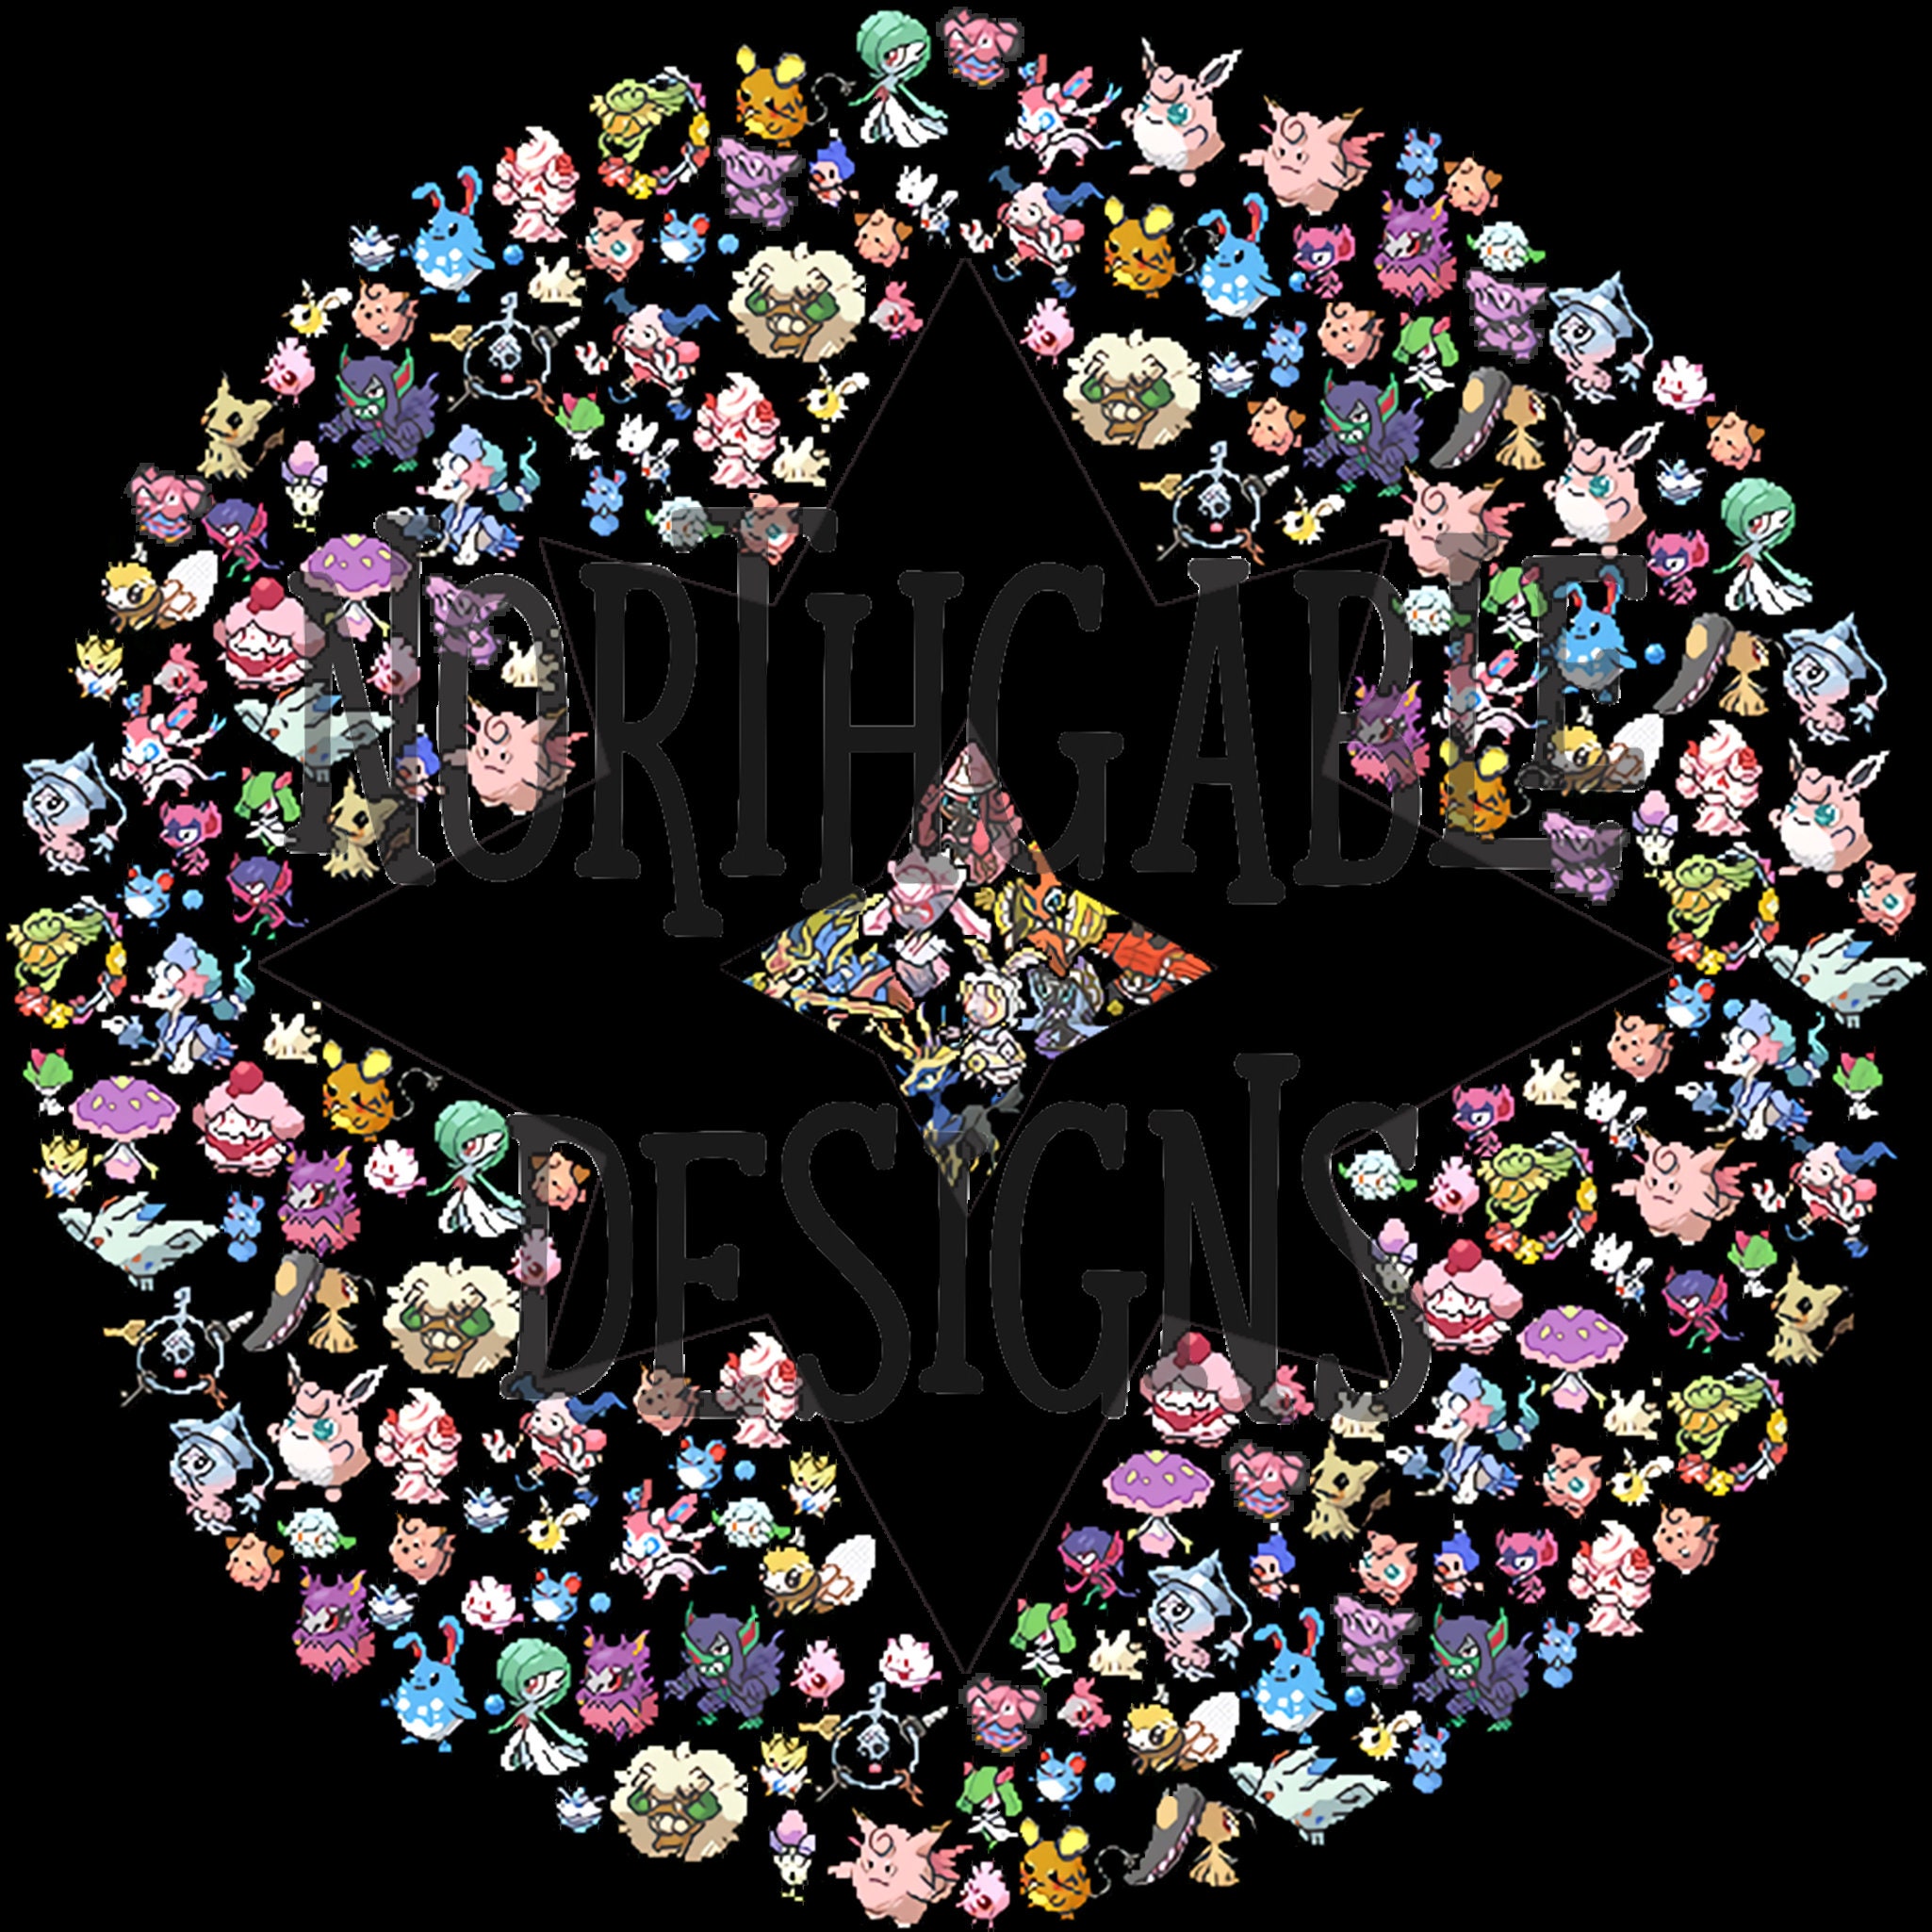 Pokemon Bug Type Symbol Mosaic black 